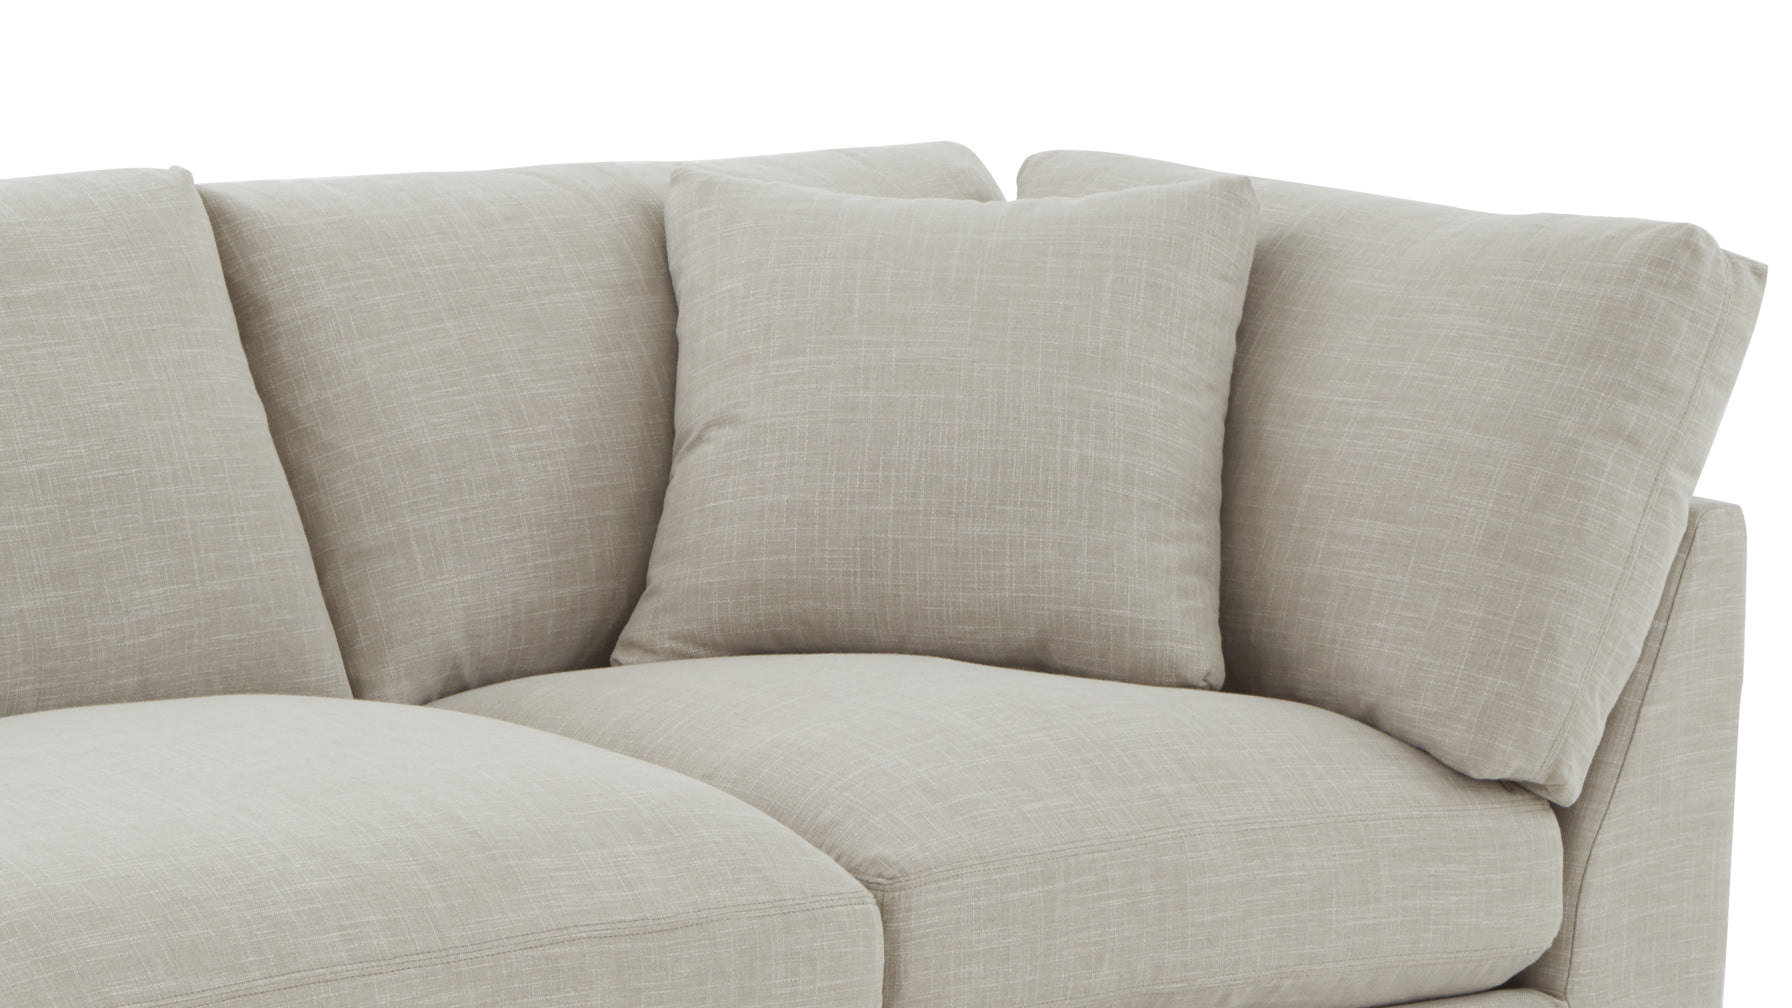 Get Together™ 3-Piece Modular Sofa, Standard, Light Pebble - Image 10